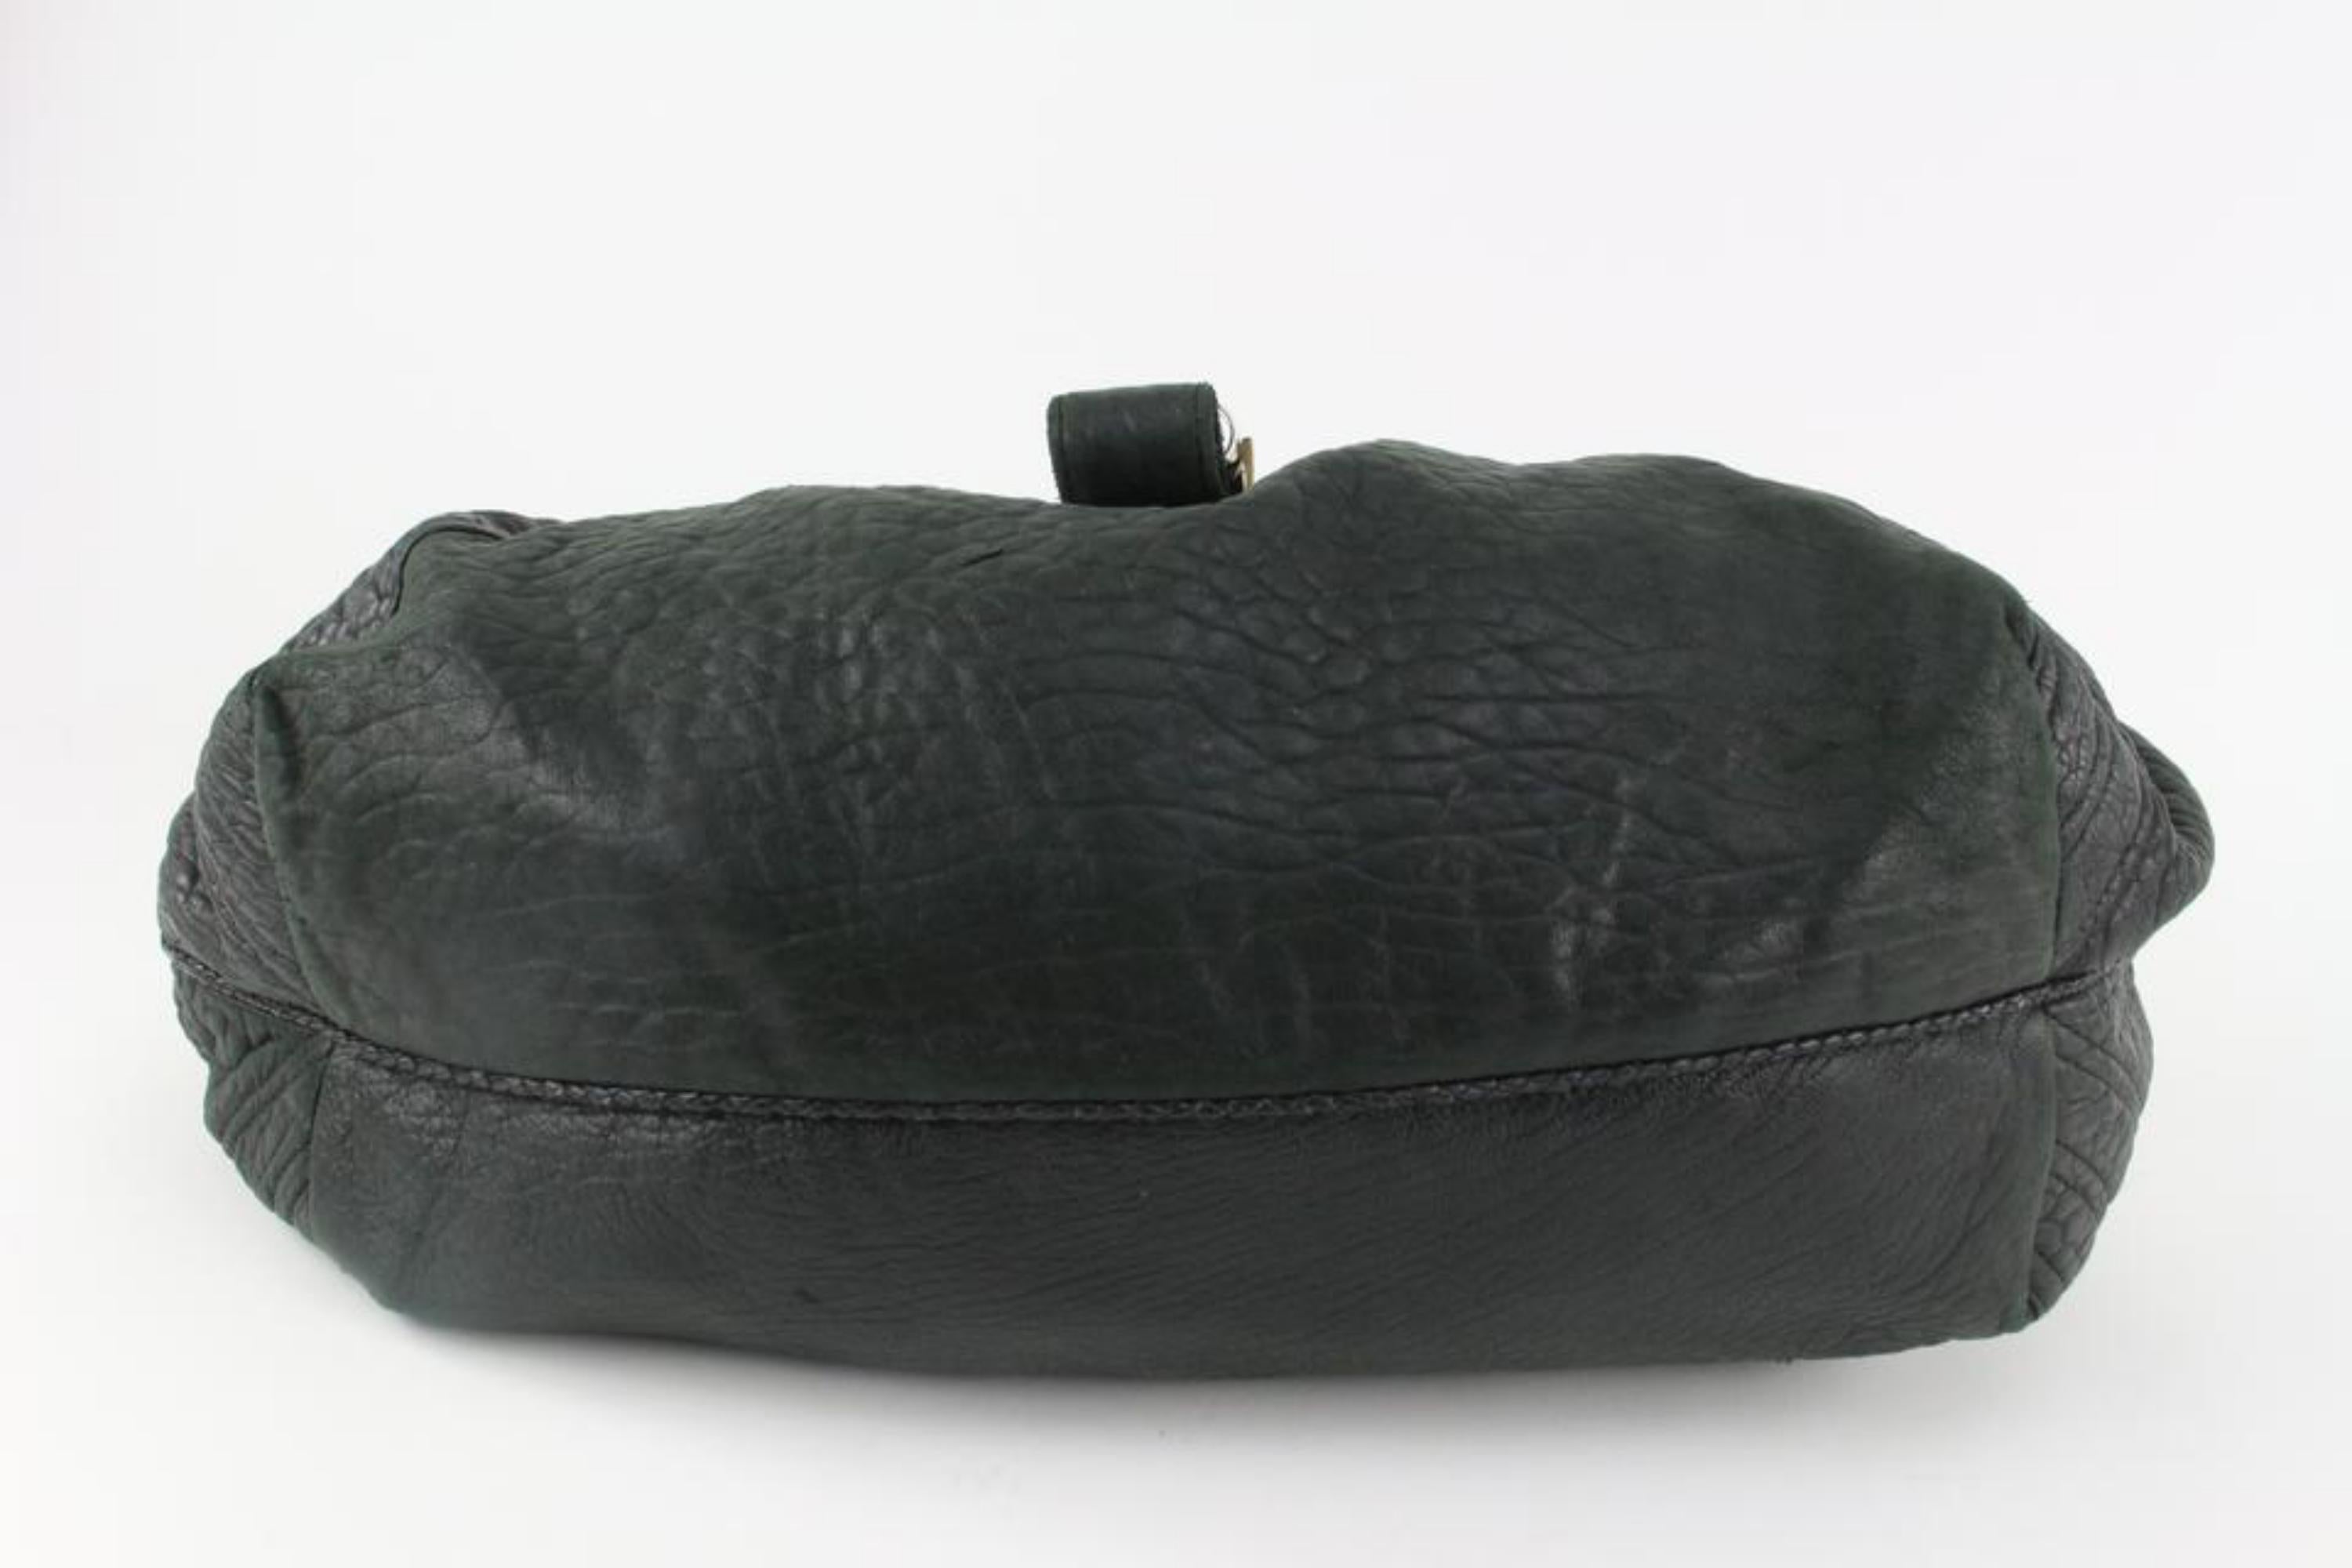 Fendi Black Leather Spy Bag Hobo 1130f21 1